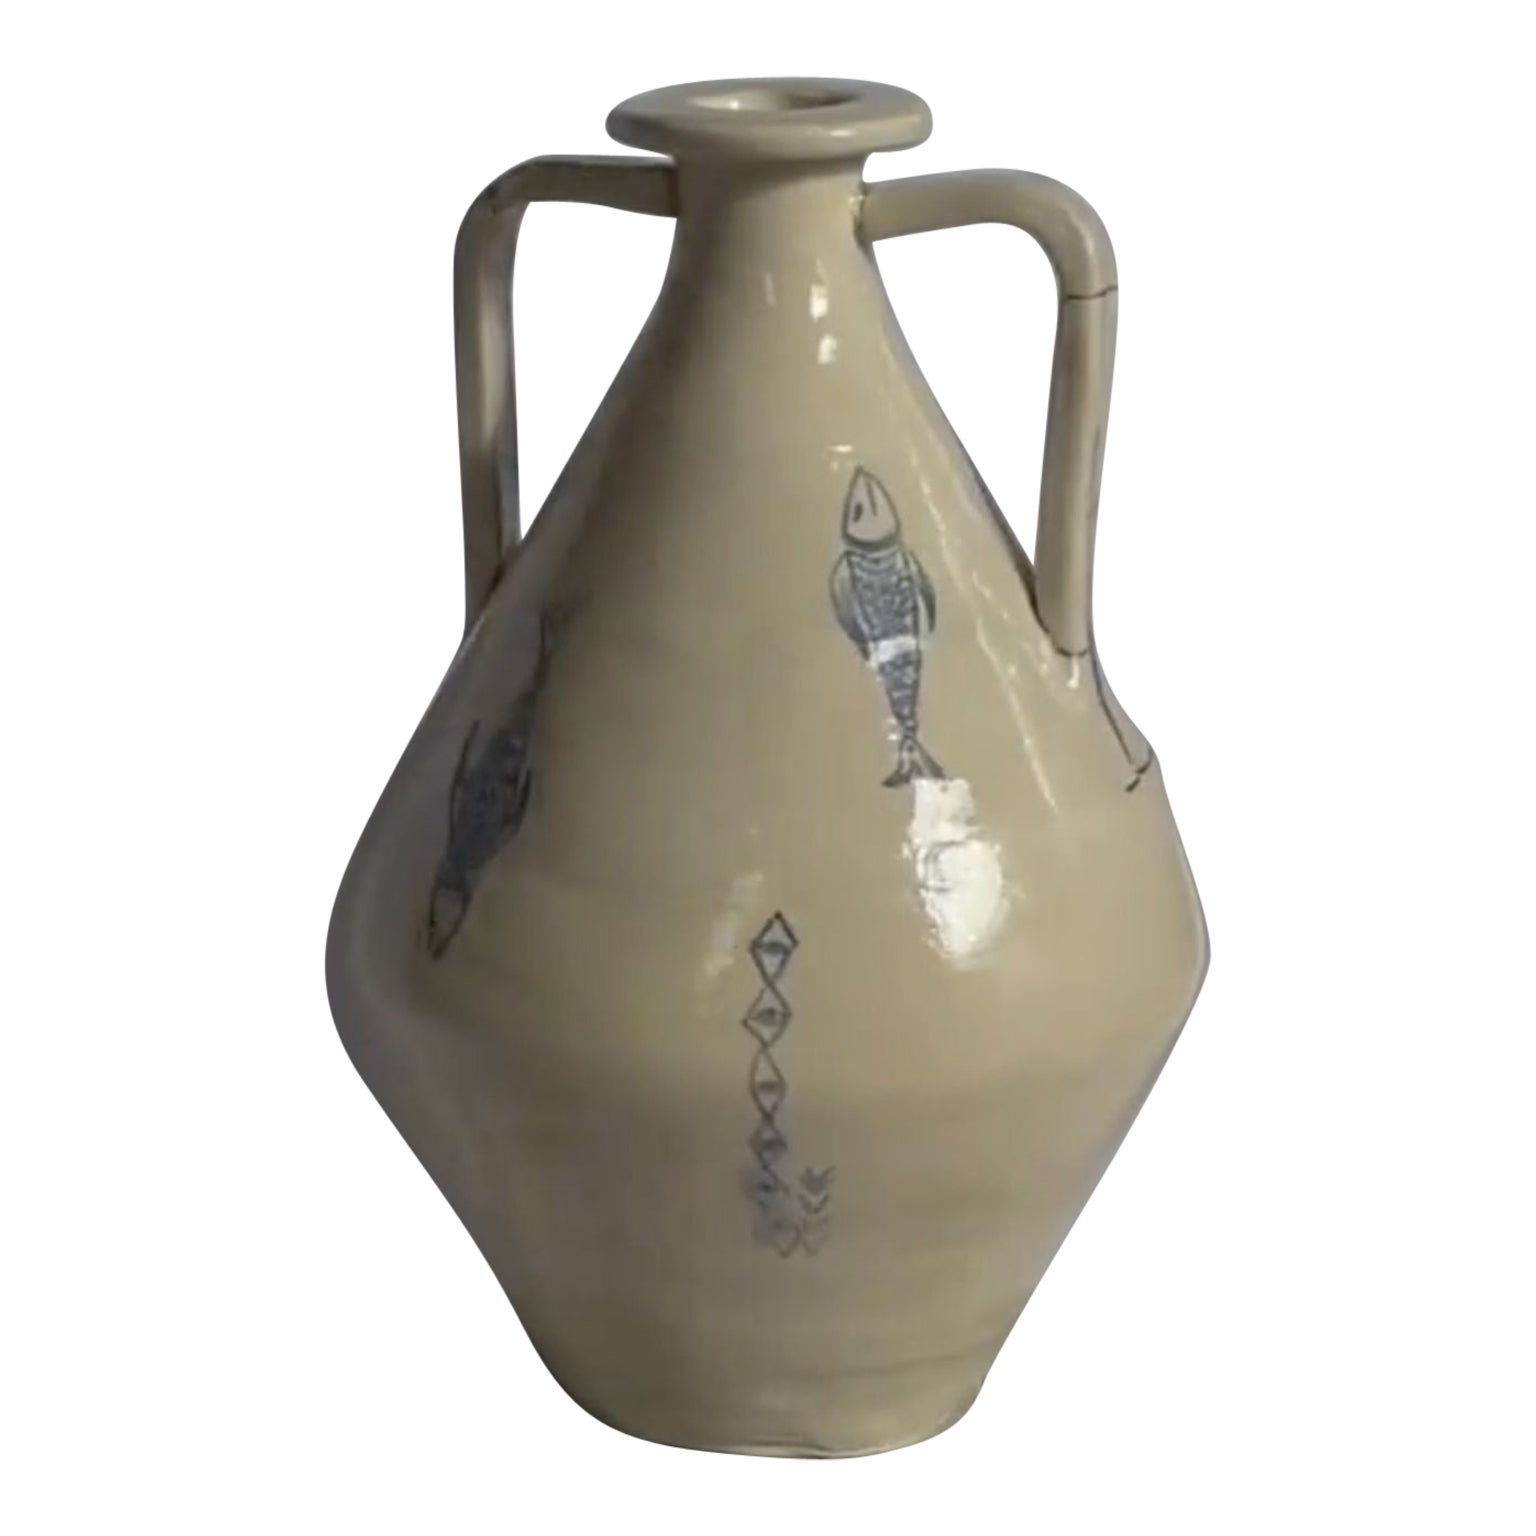 Protector Vase 2 by Solem Ceramics